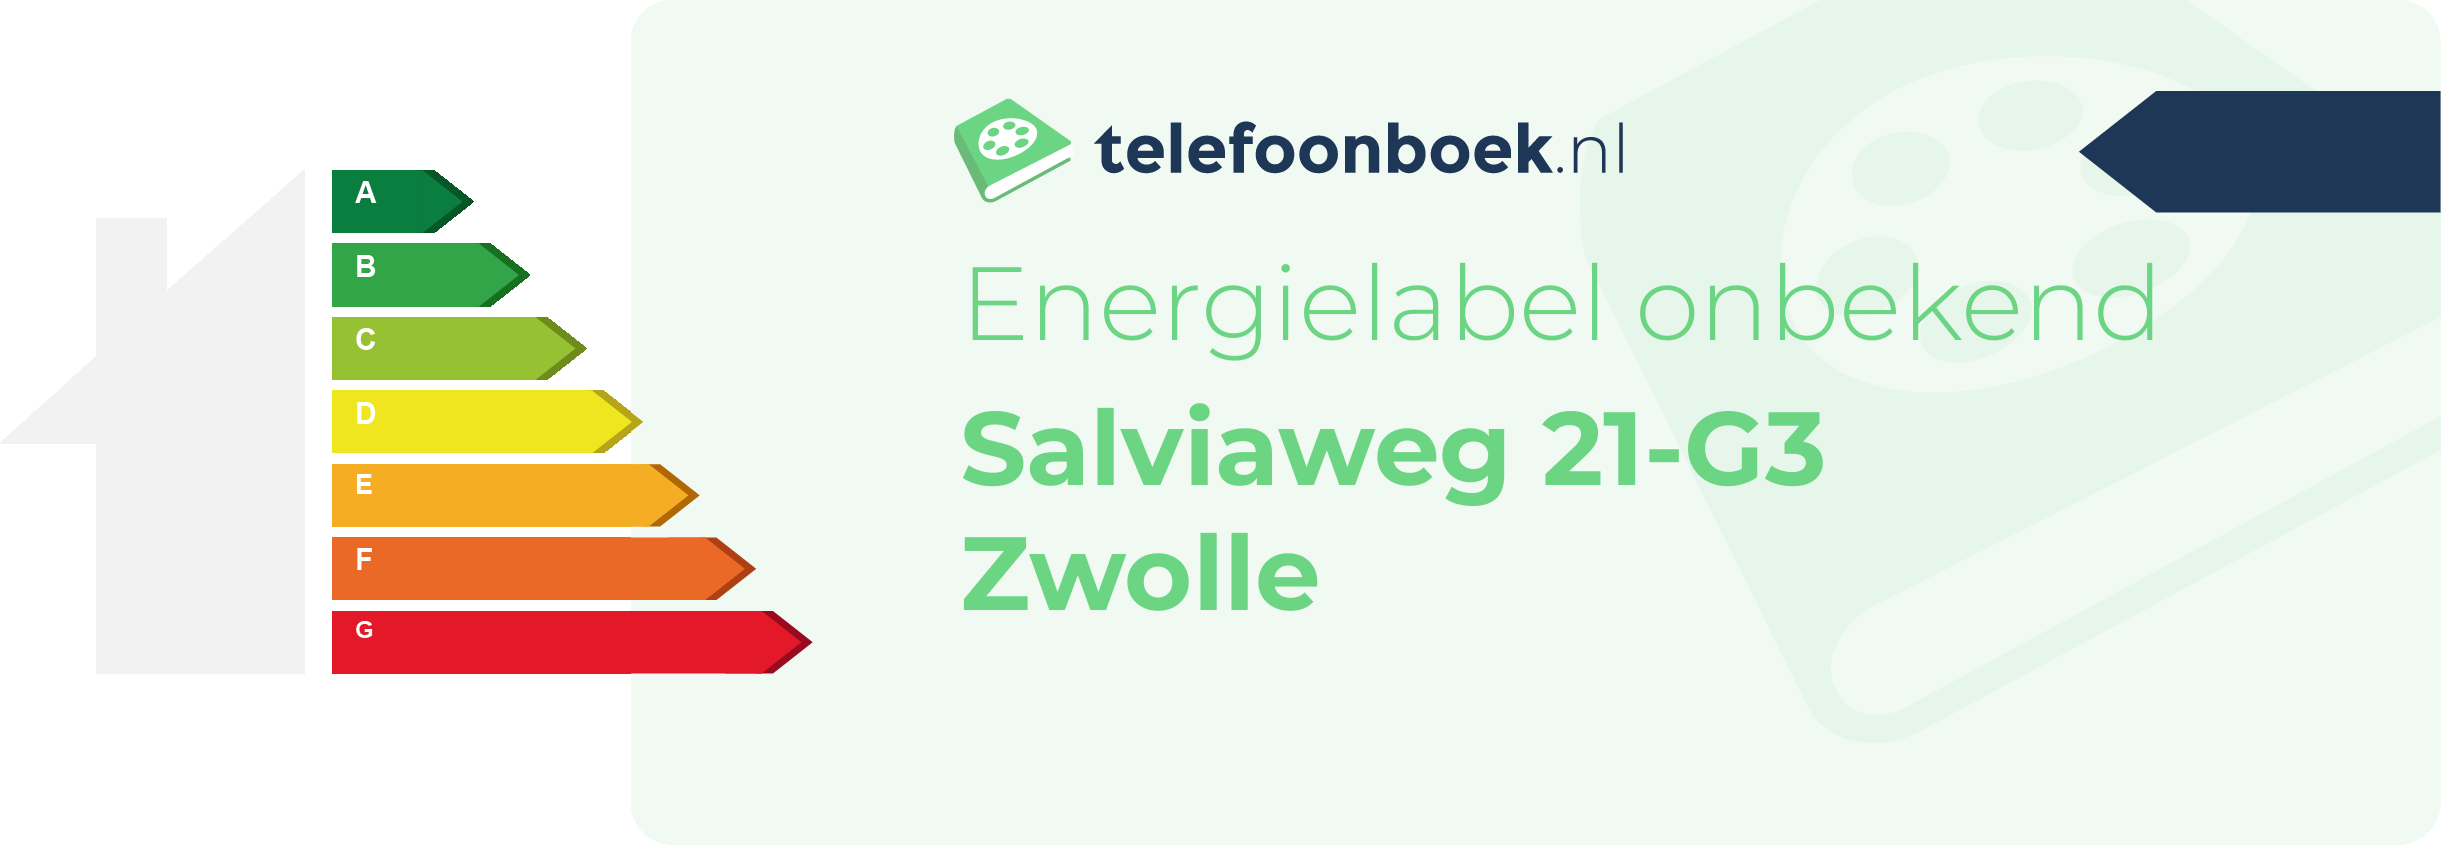 Energielabel Salviaweg 21-G3 Zwolle